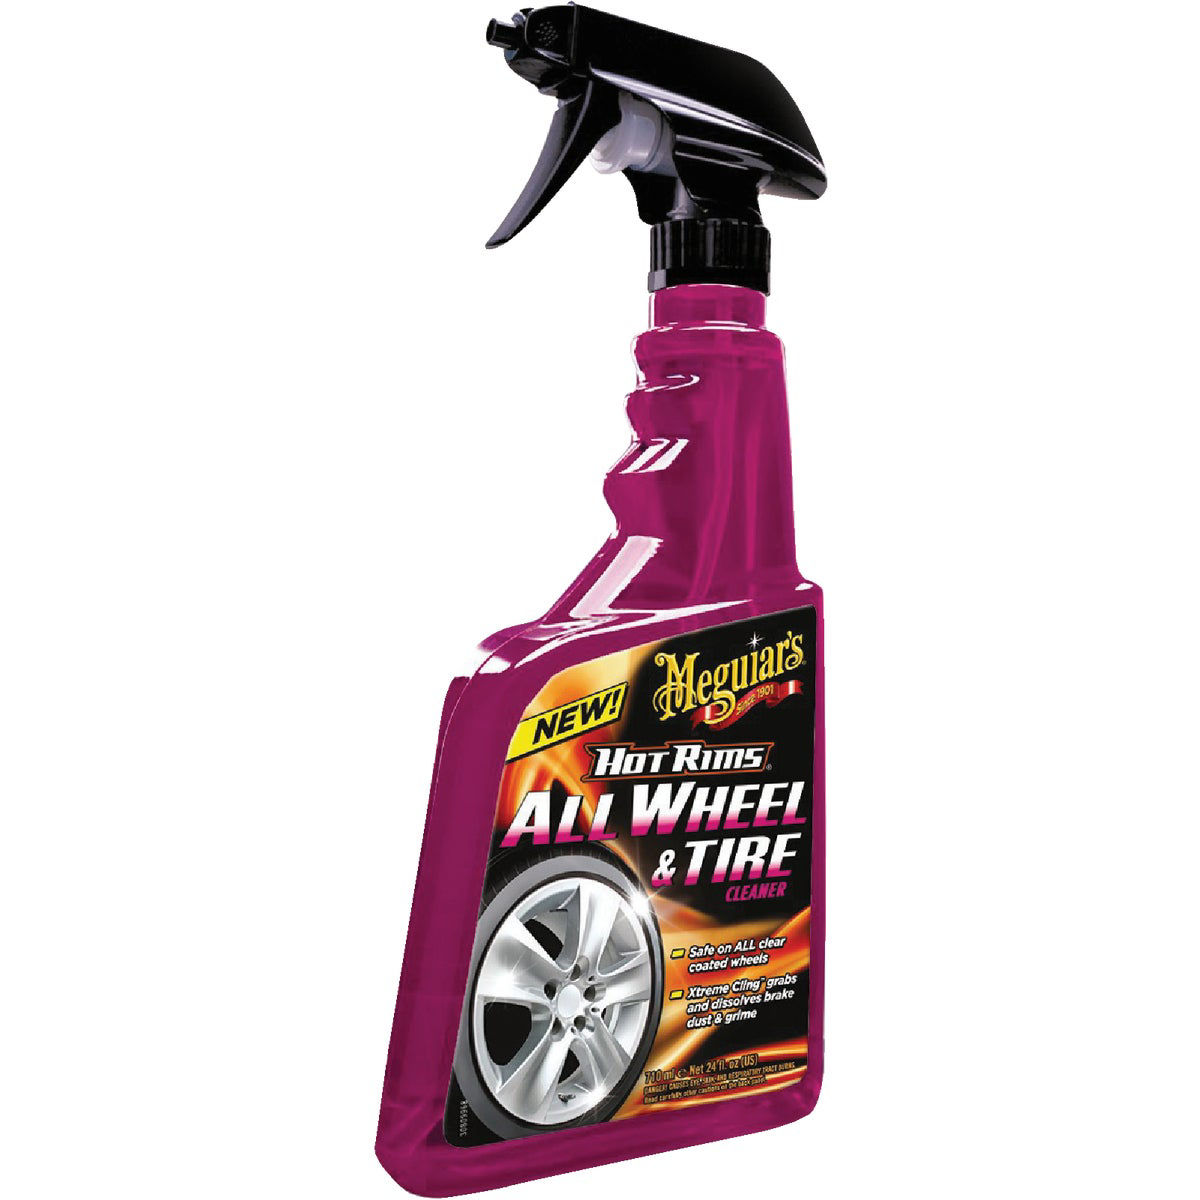 Meguiars Inc G-9524  Hot Rims Wheel & Tire Cleaner, 24 oz.